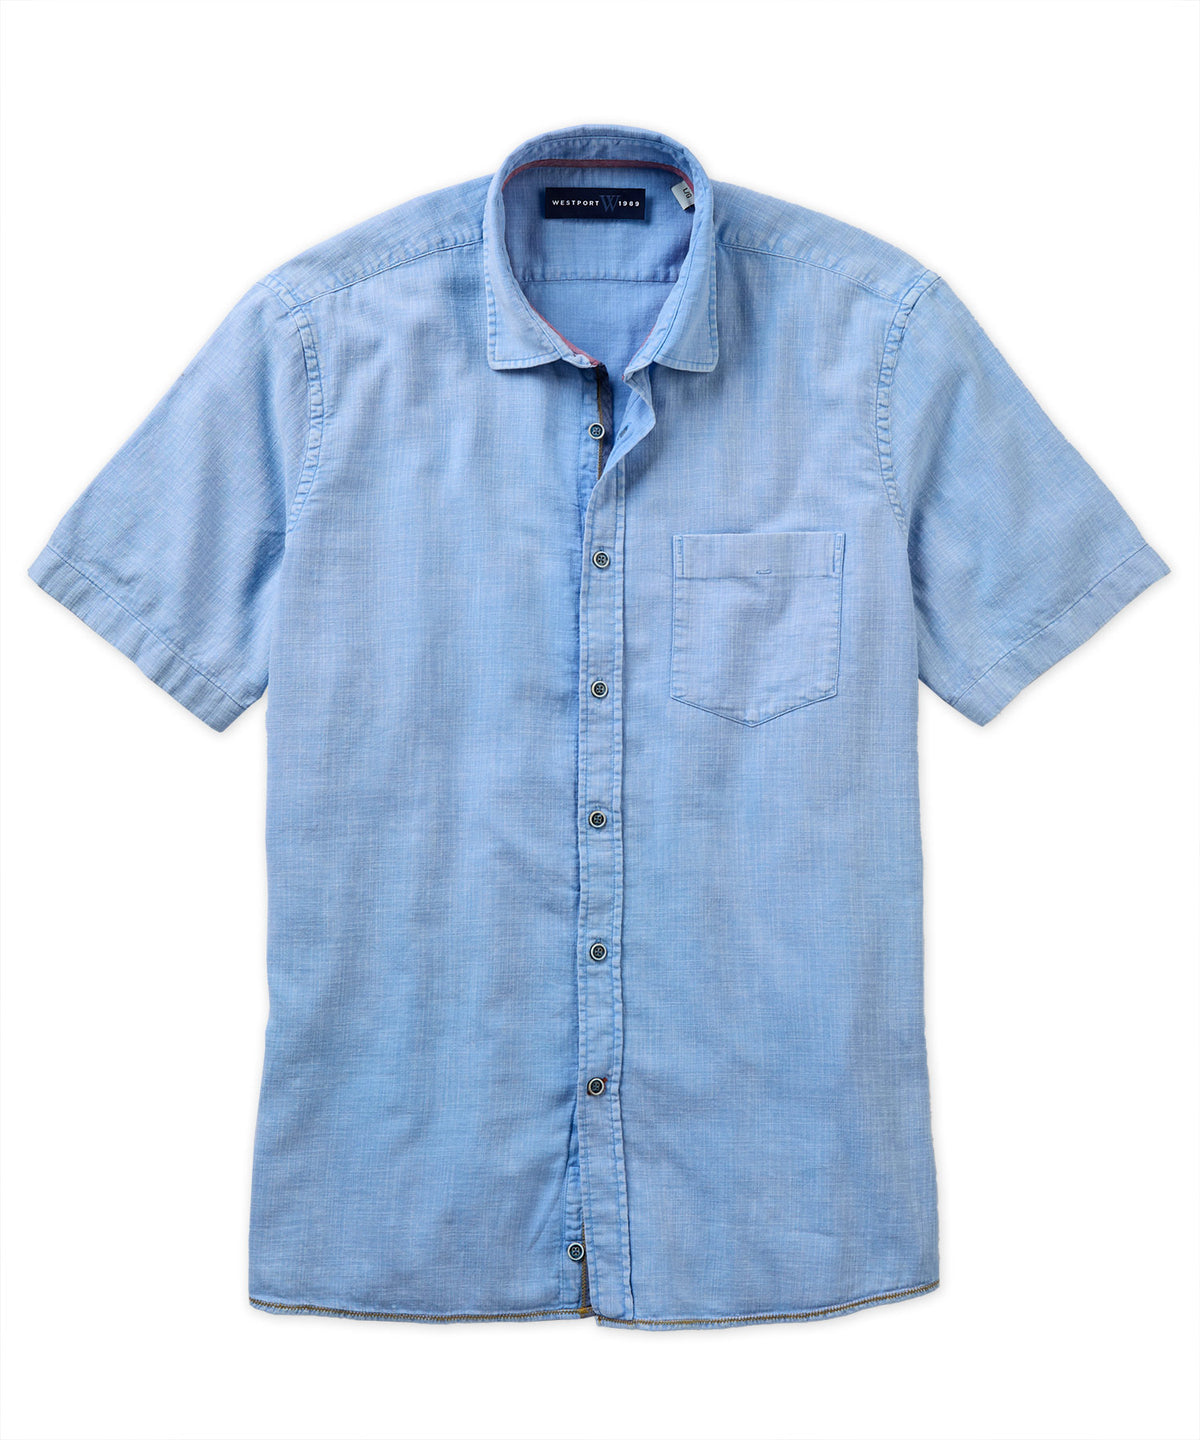 Westport 1989 Garment Dyed Slub Cotton Sport Shirt, Men's Big & Tall